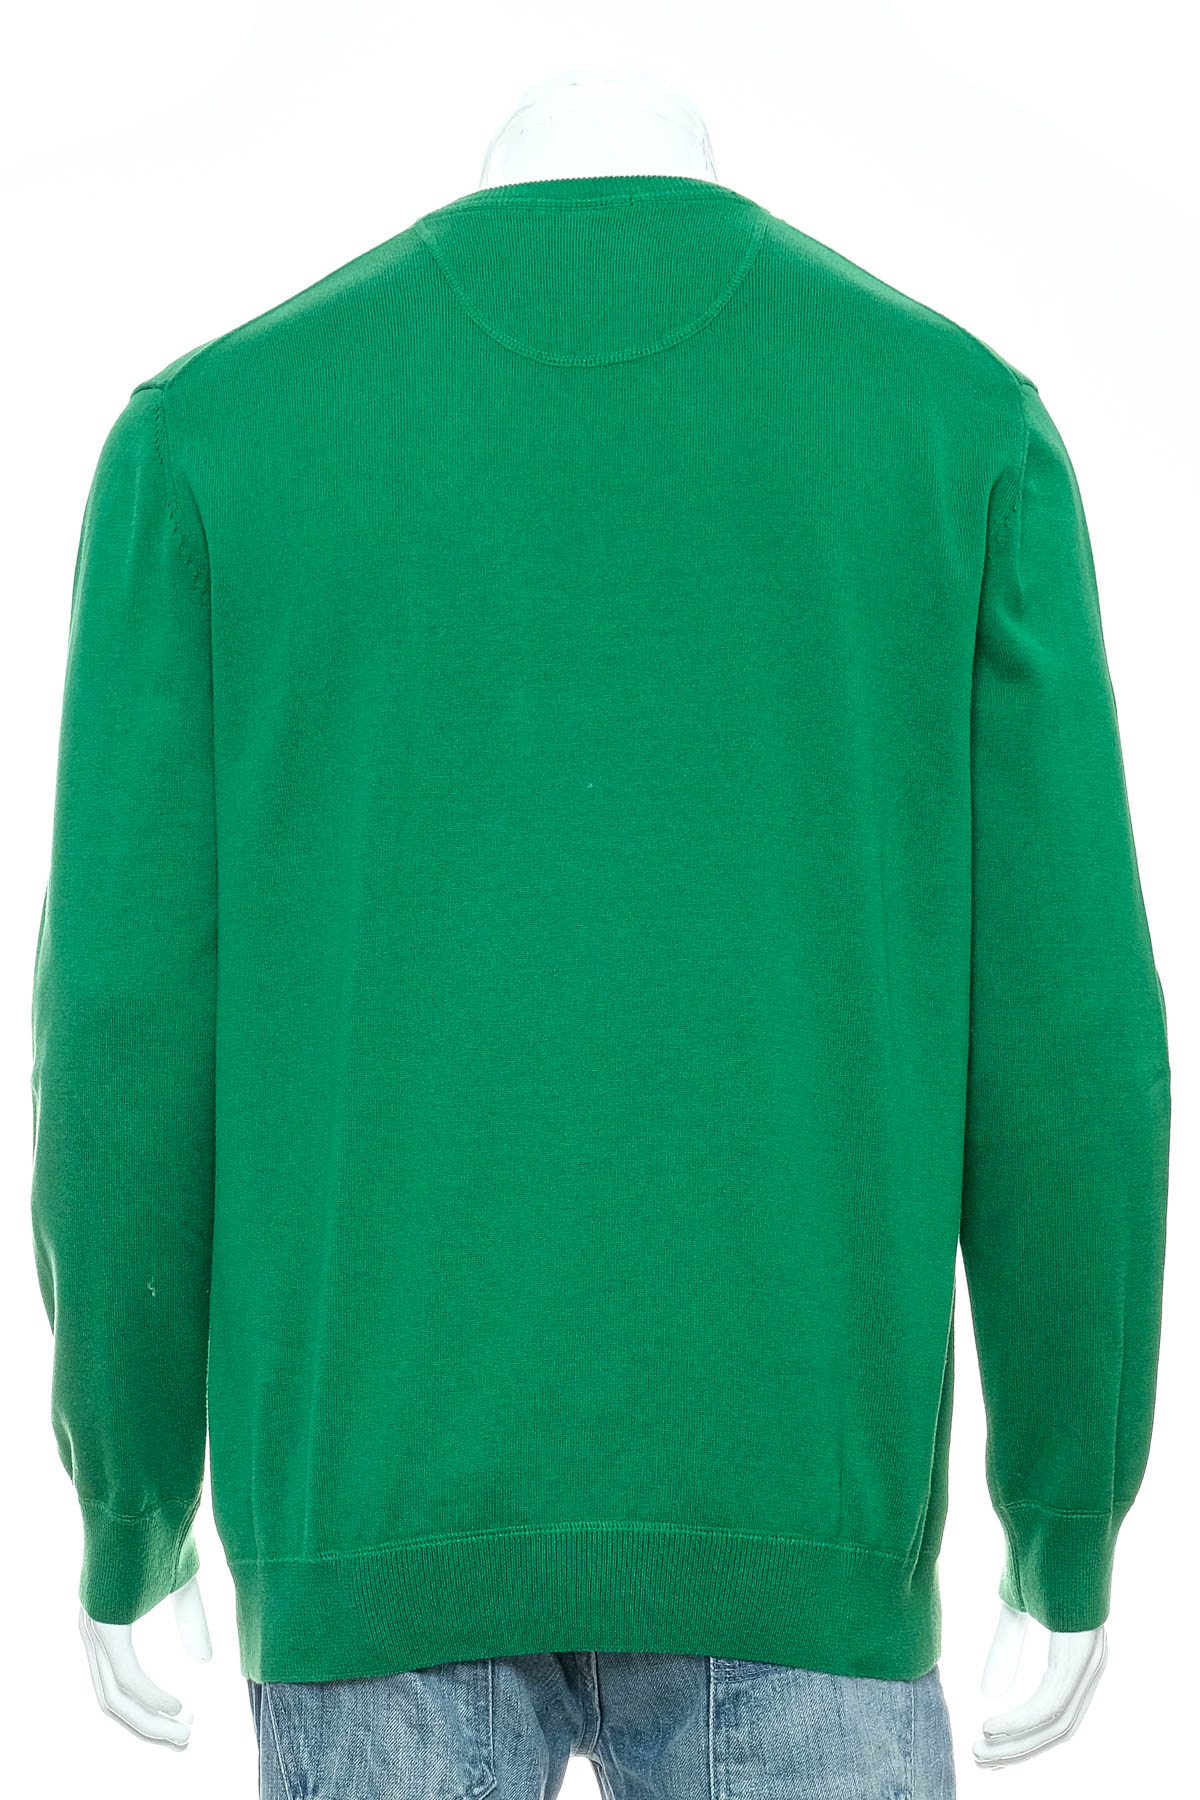 Men's sweater - S.Oliver - 1